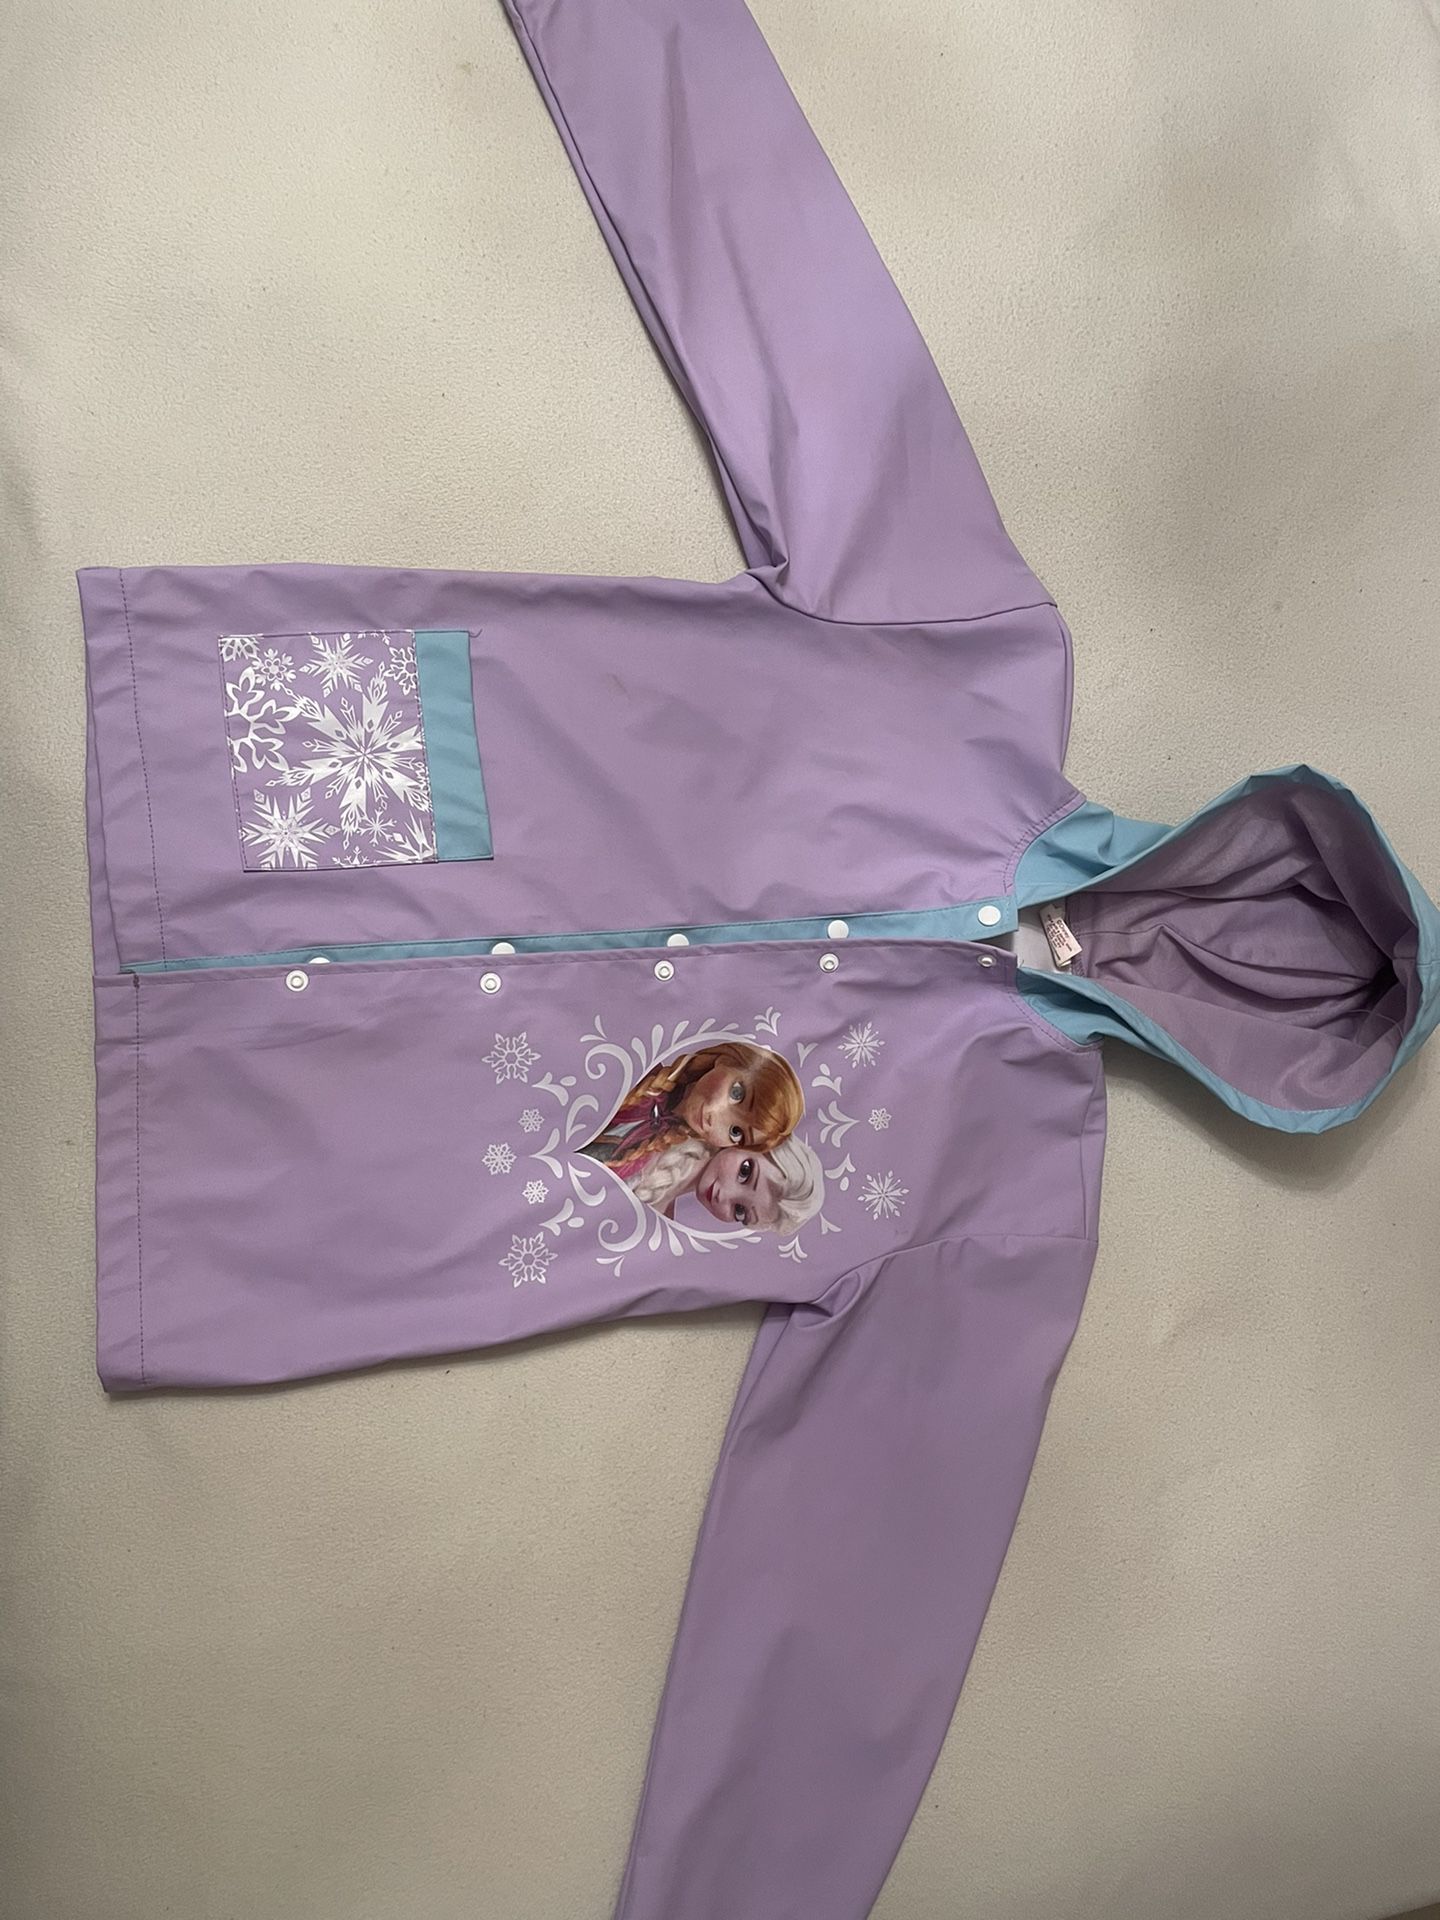 Disney Girls Raincoat Size Small (4-5) - $10